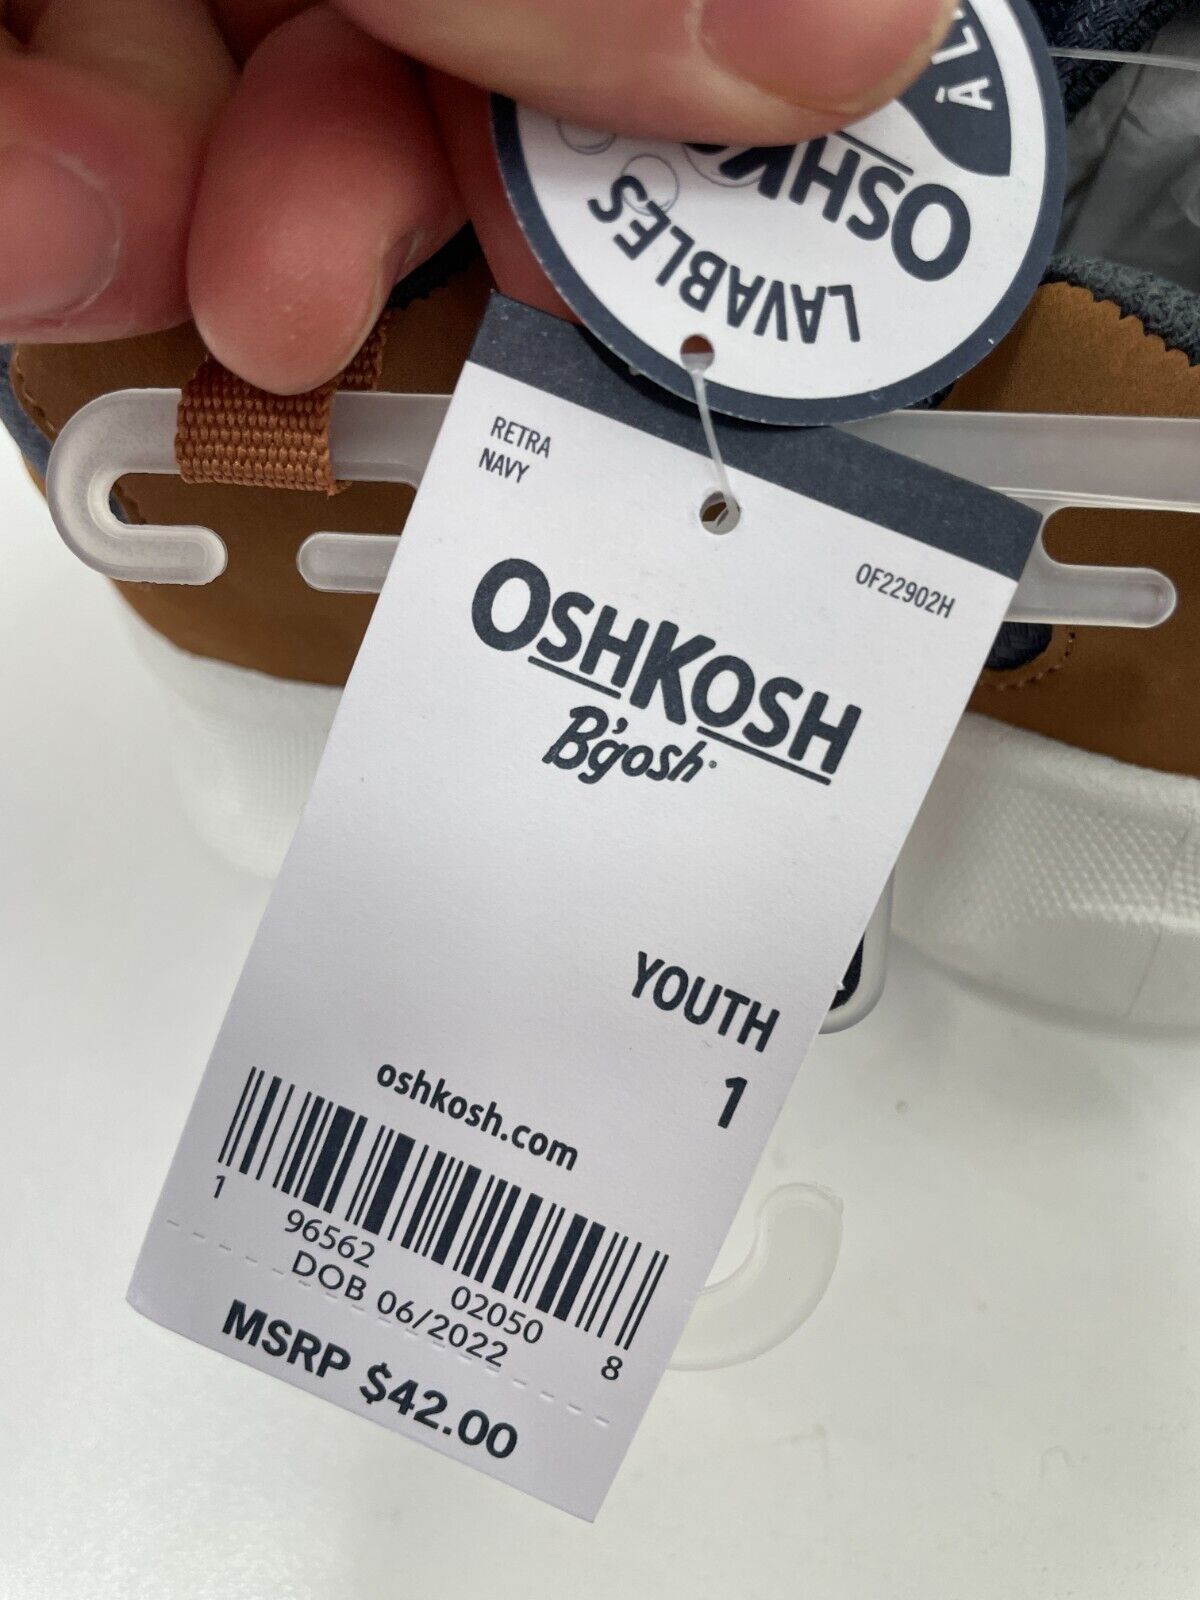 OshKosh B'Gosh Youth 1 Retra Pull On Logo Mesh Sneakers Navy Blue OF22902H